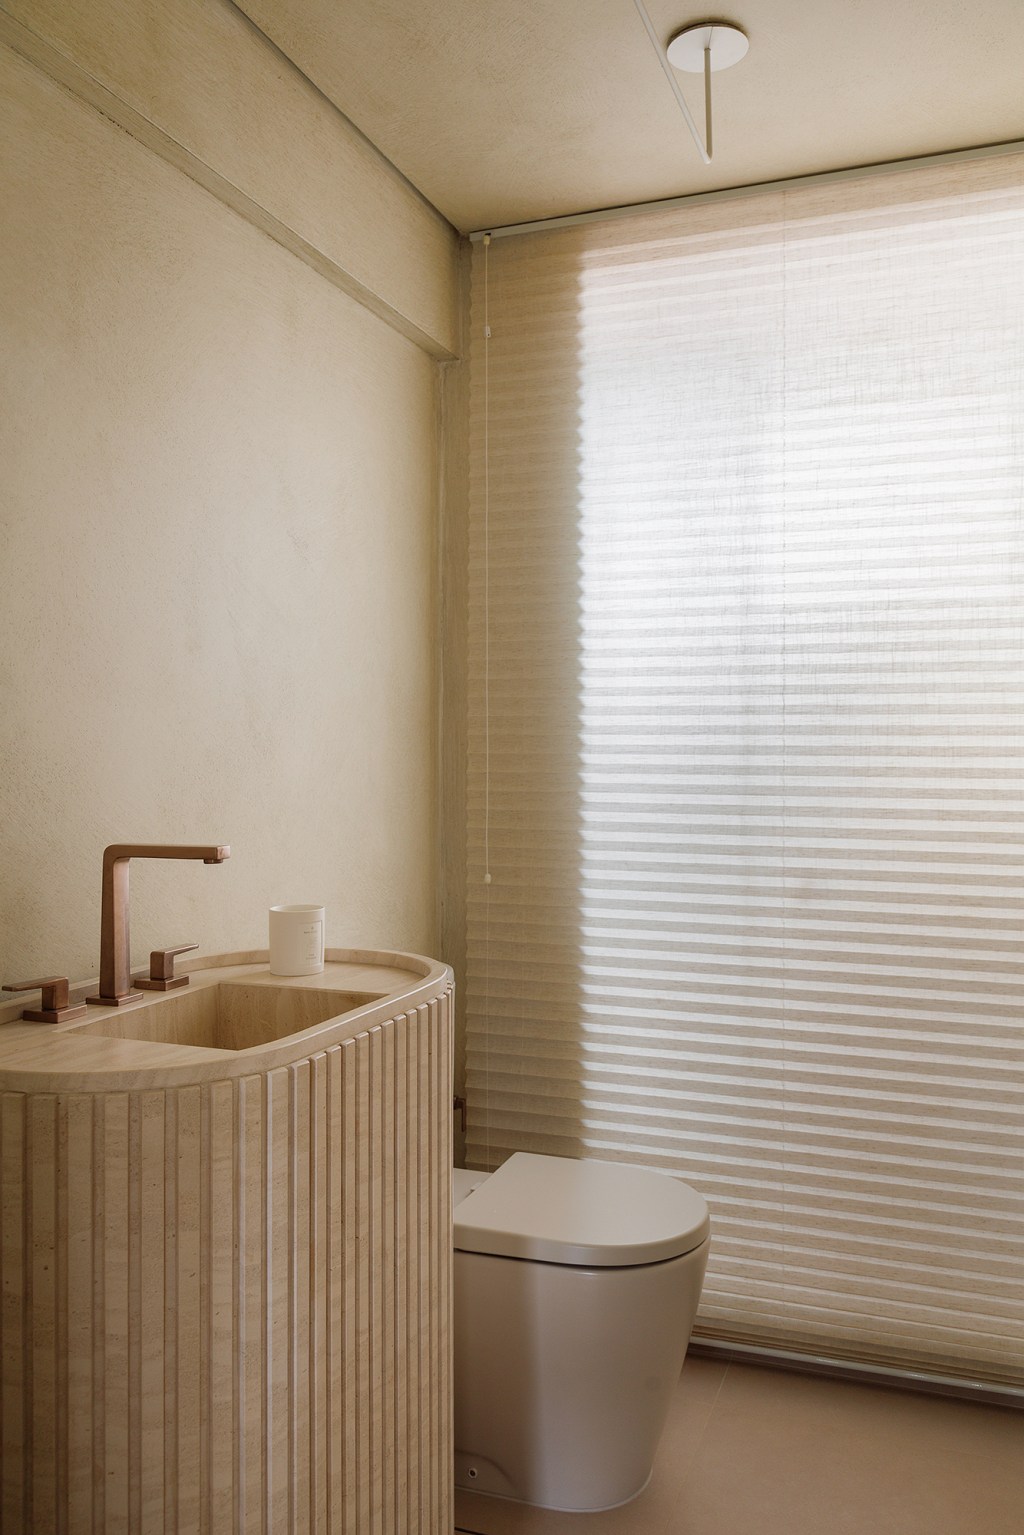 Apê 130 m2 ar mediterrâneo formas orgânicas Gustavo Marasca banheiro cortina pia